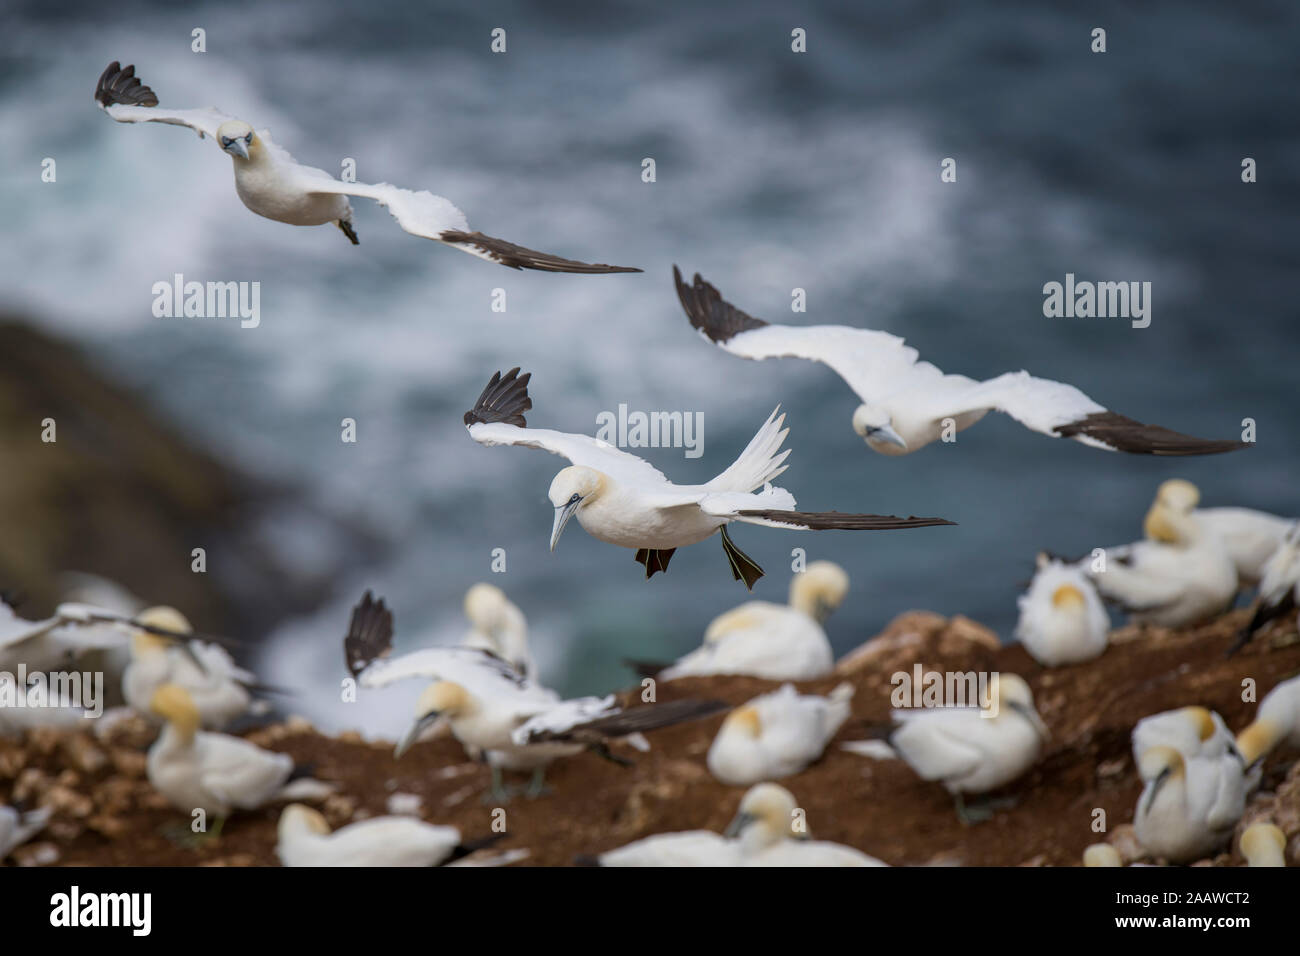 Scotland, flying Northern gannets Stock Photo